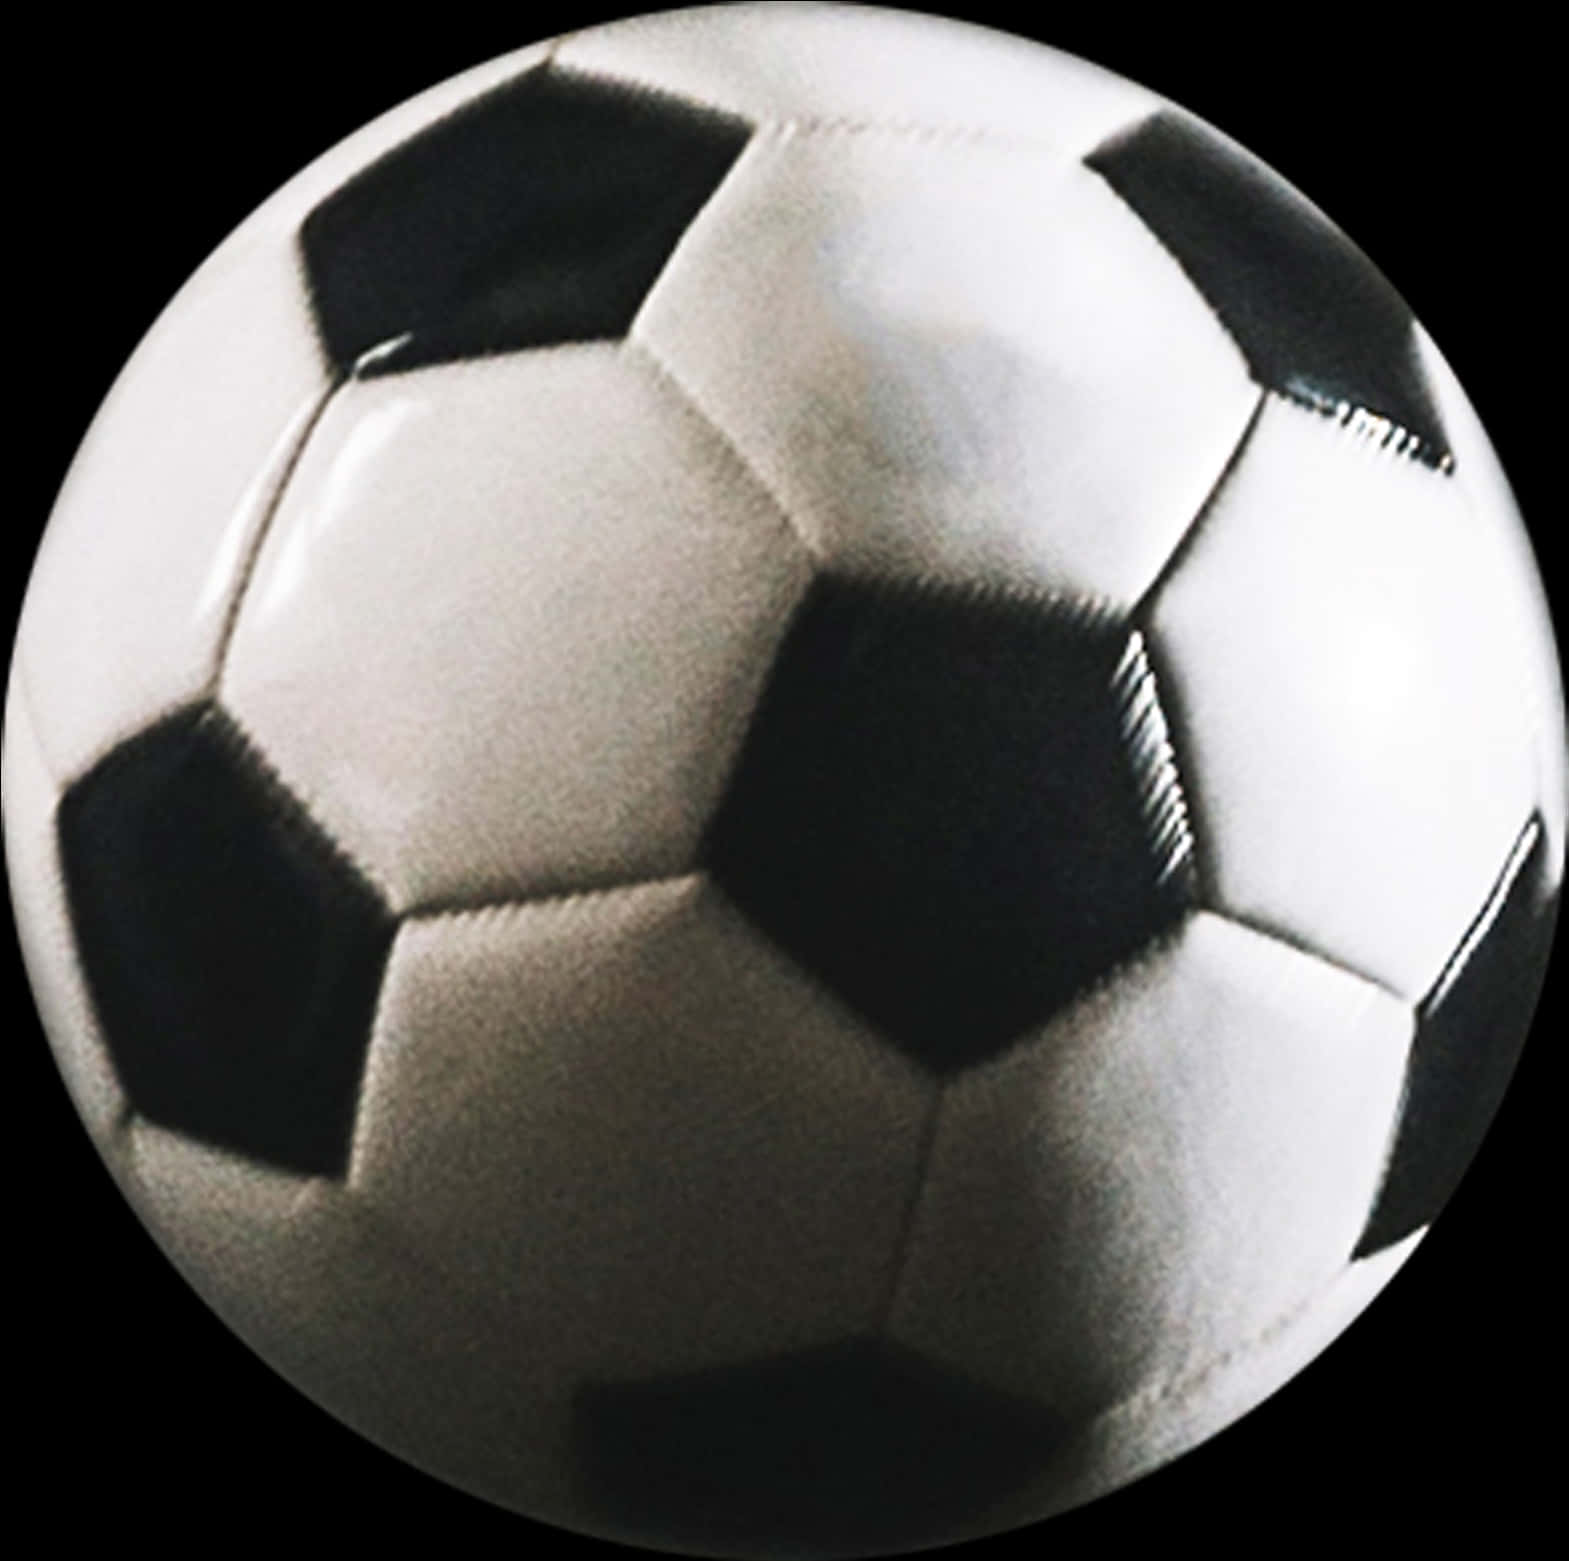 A Close Up Of A Football Ball